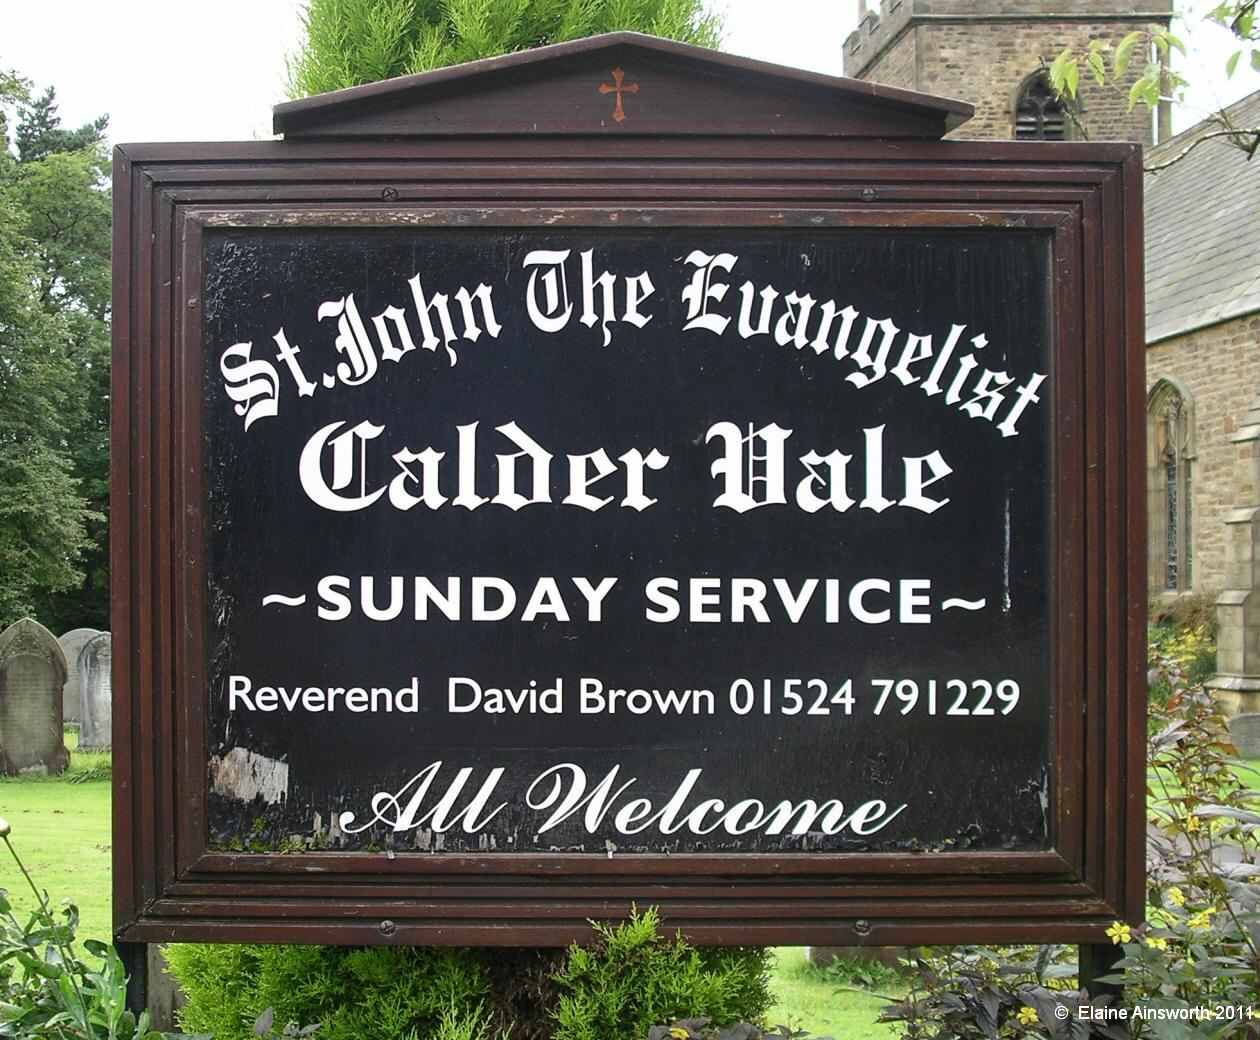 St John the Evangelist, Calder Vale, church board